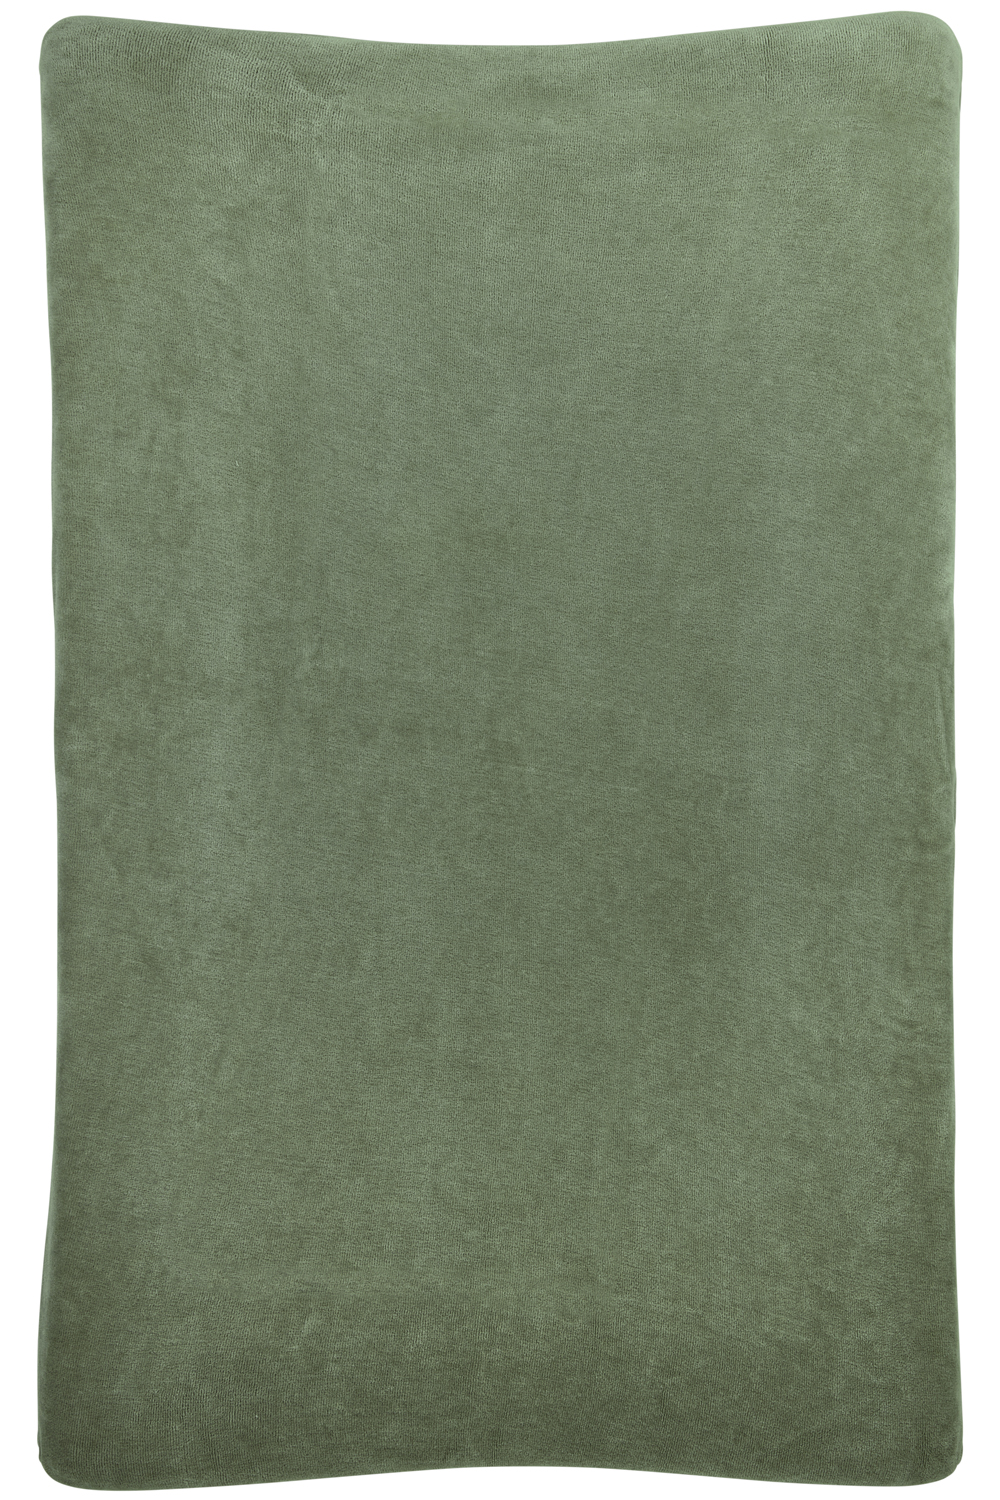 Aankleedkussenhoes Velvet - forest green - 50x70cm